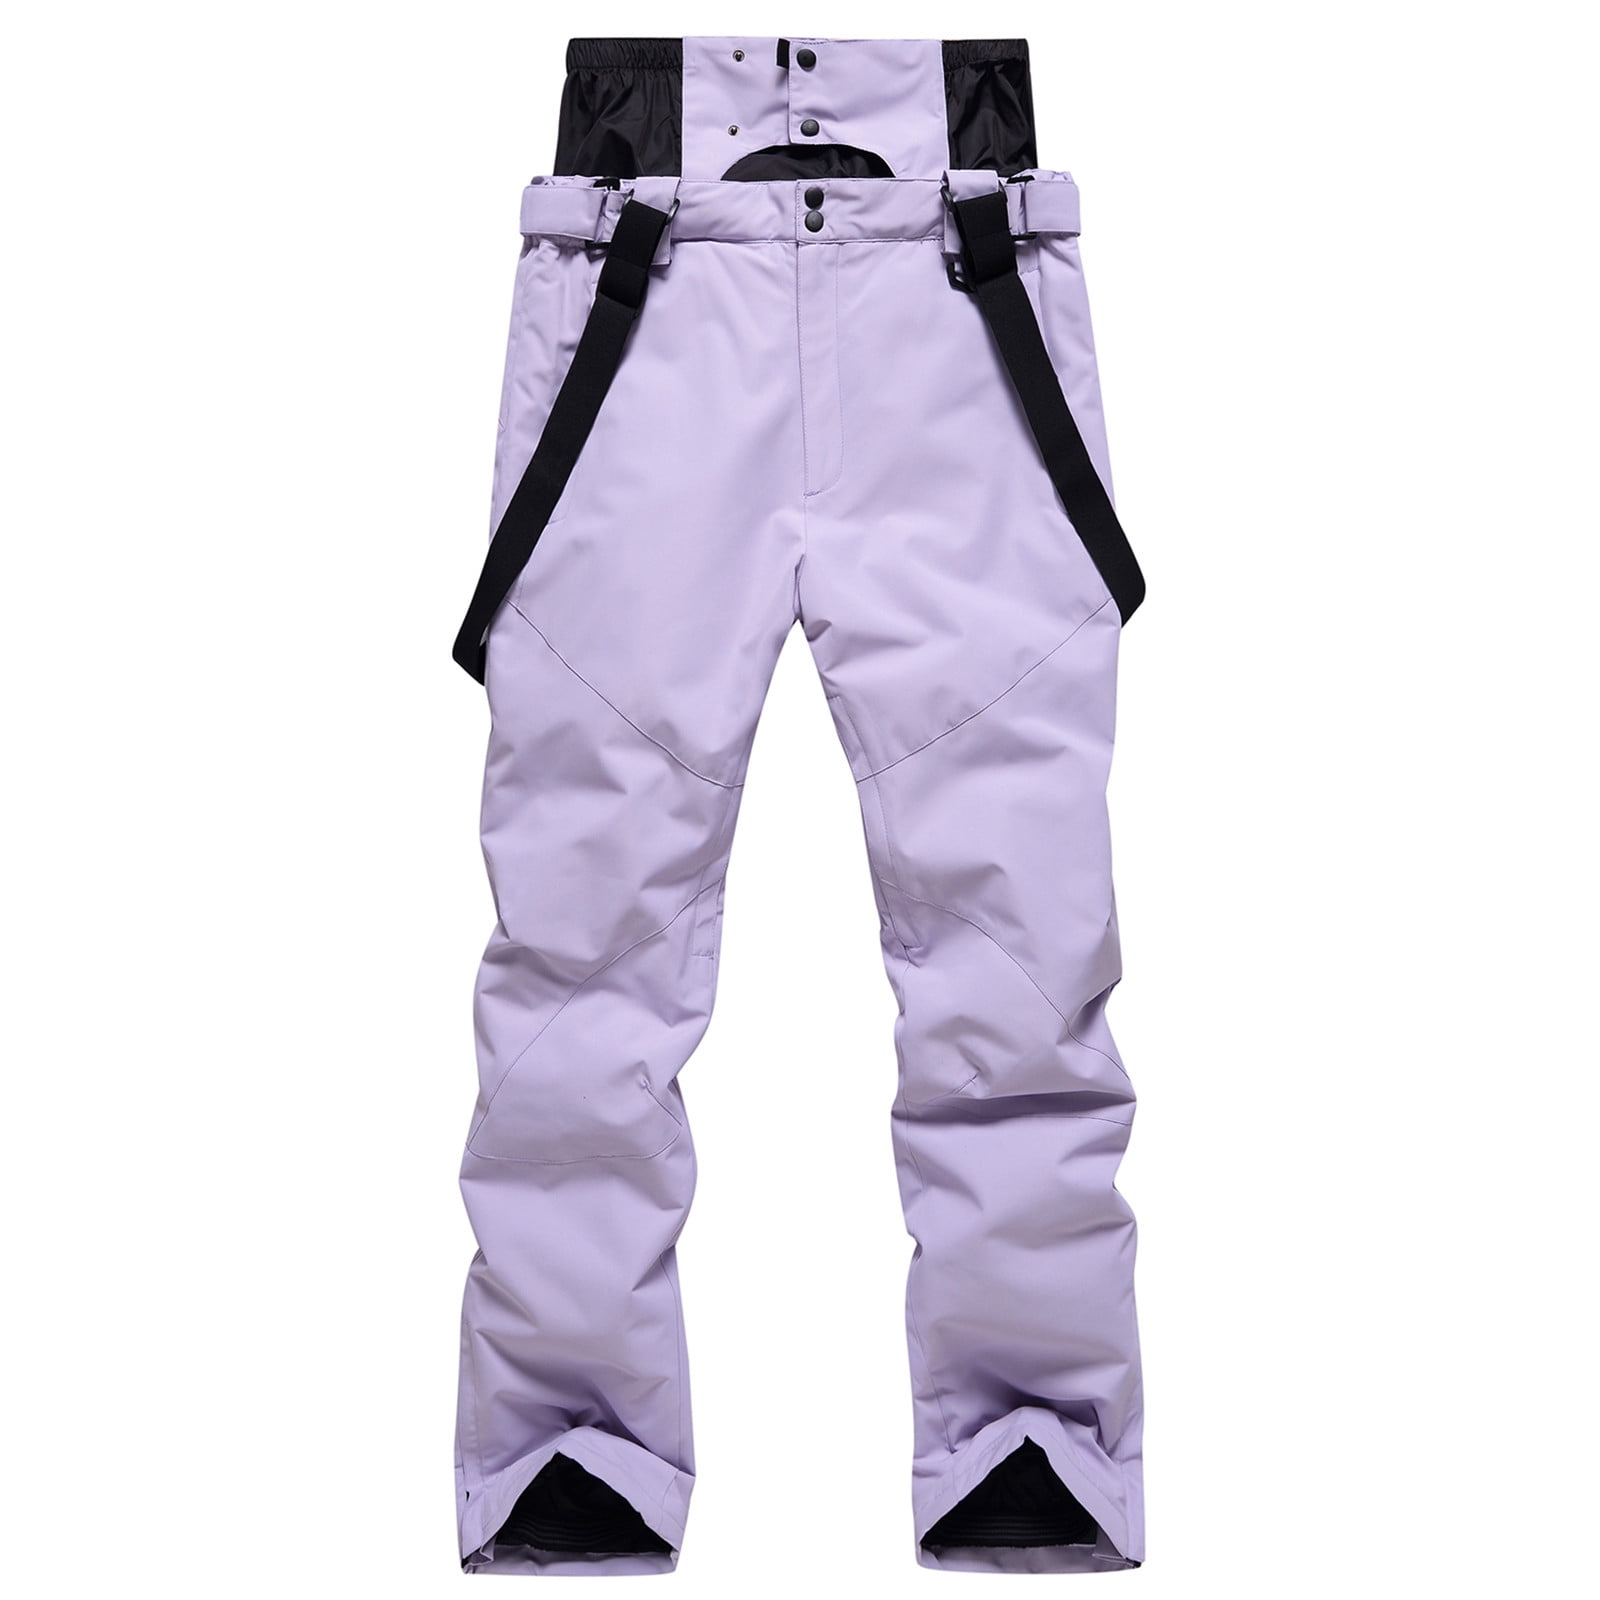 XFLWAM Women's Ski Snow Pants Waterproof Wind Lightweight Thermal Pants  Outdoor Hiking Mountain Softshell with Belt Beige XL